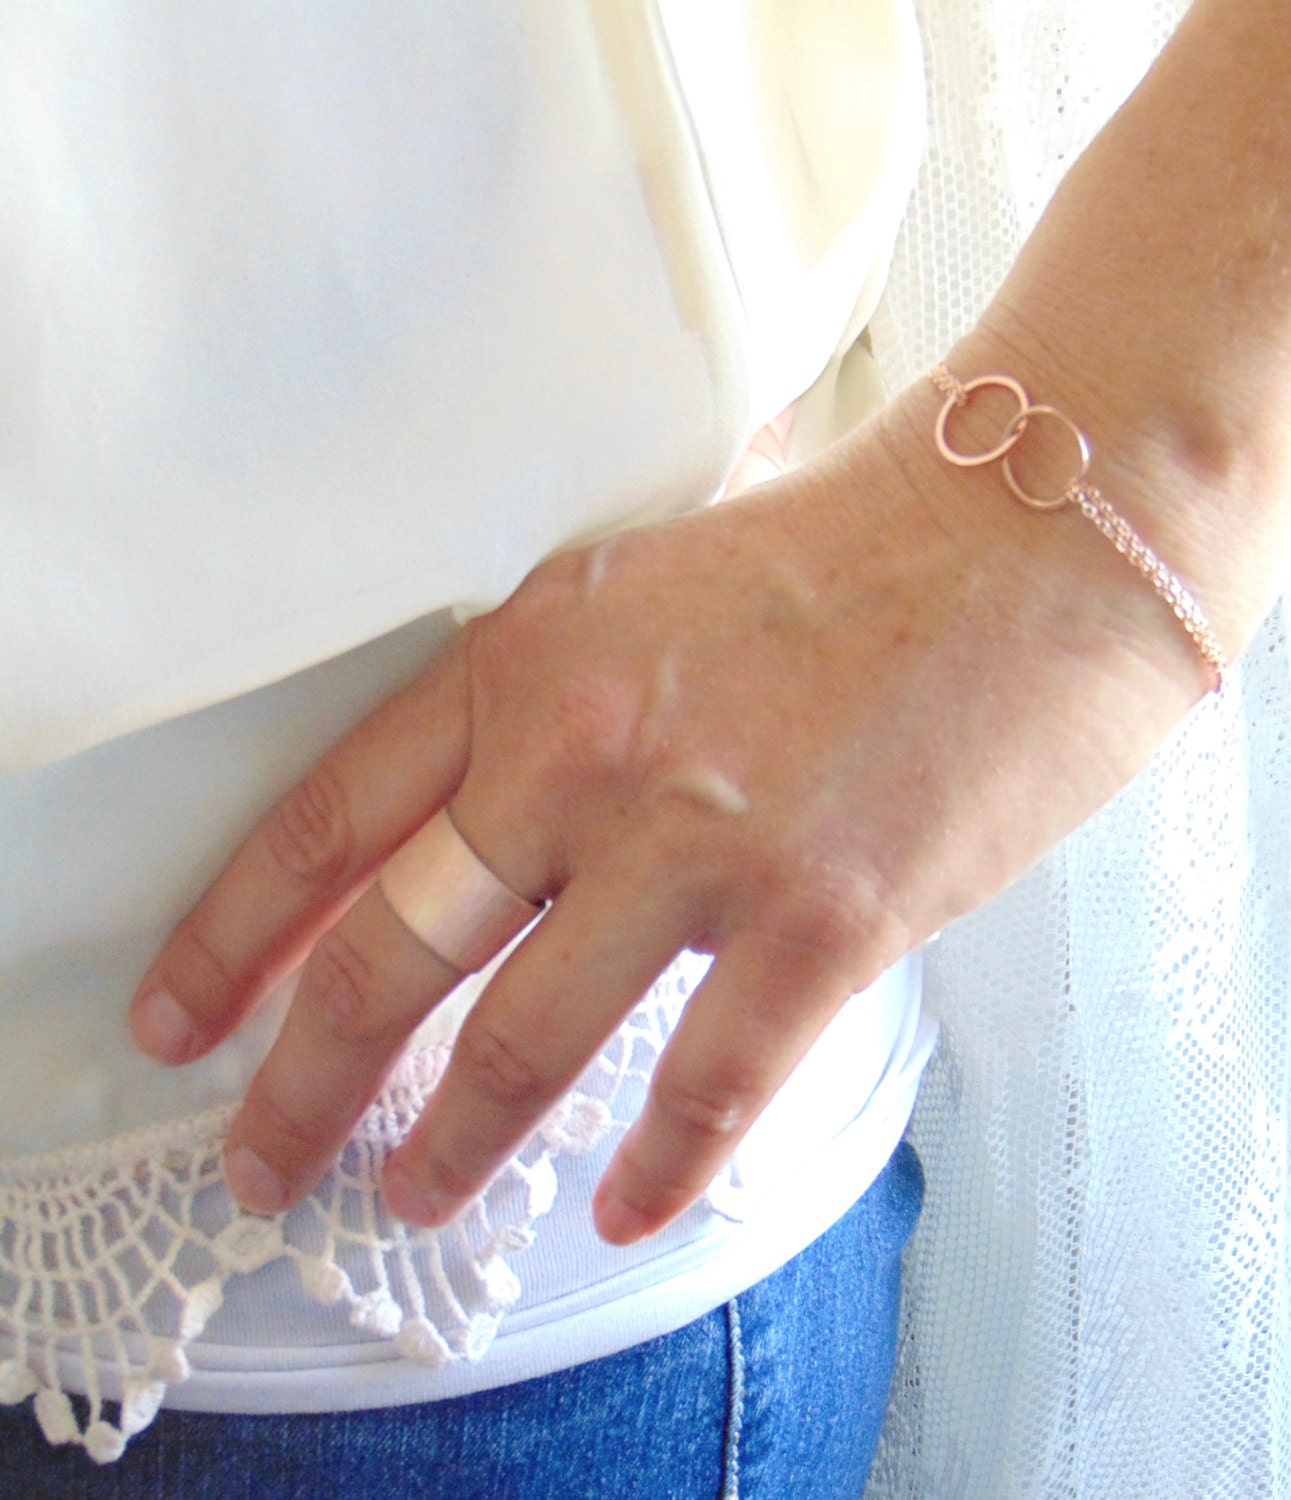 Linked circles Bracelet, Eternity bracelet, Mother daughter bracelet, Dainty jewelry, Mom gift, Lovers gift, interlocking circles